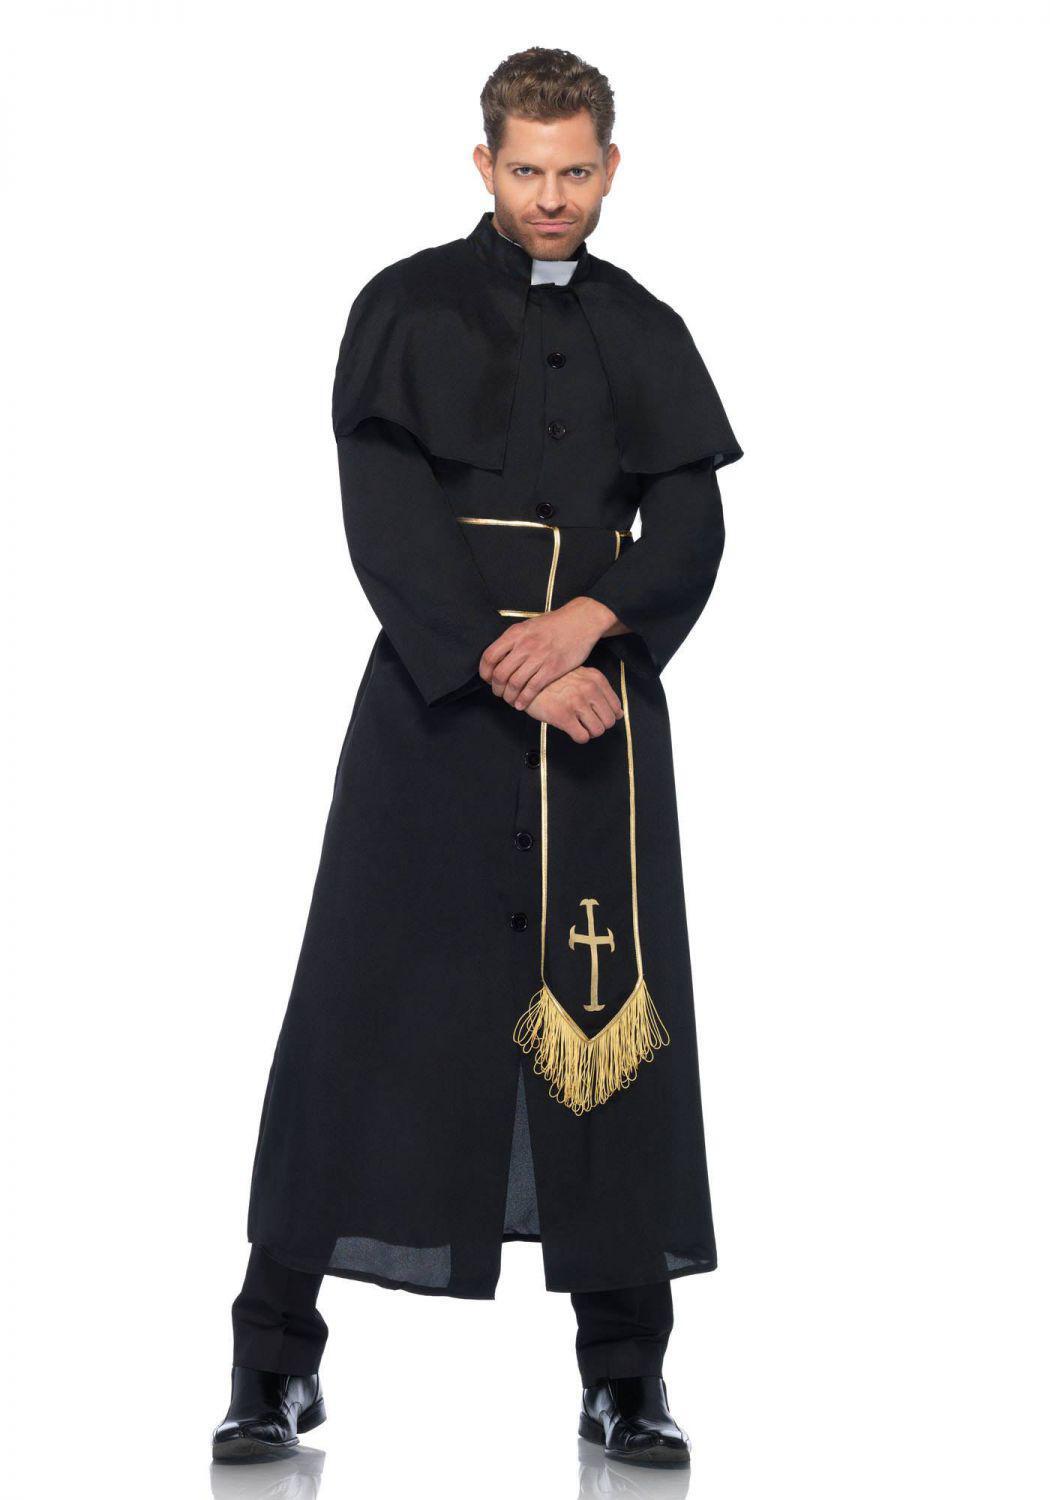 Leg Avenue Karneval Herren Kostüm Priester